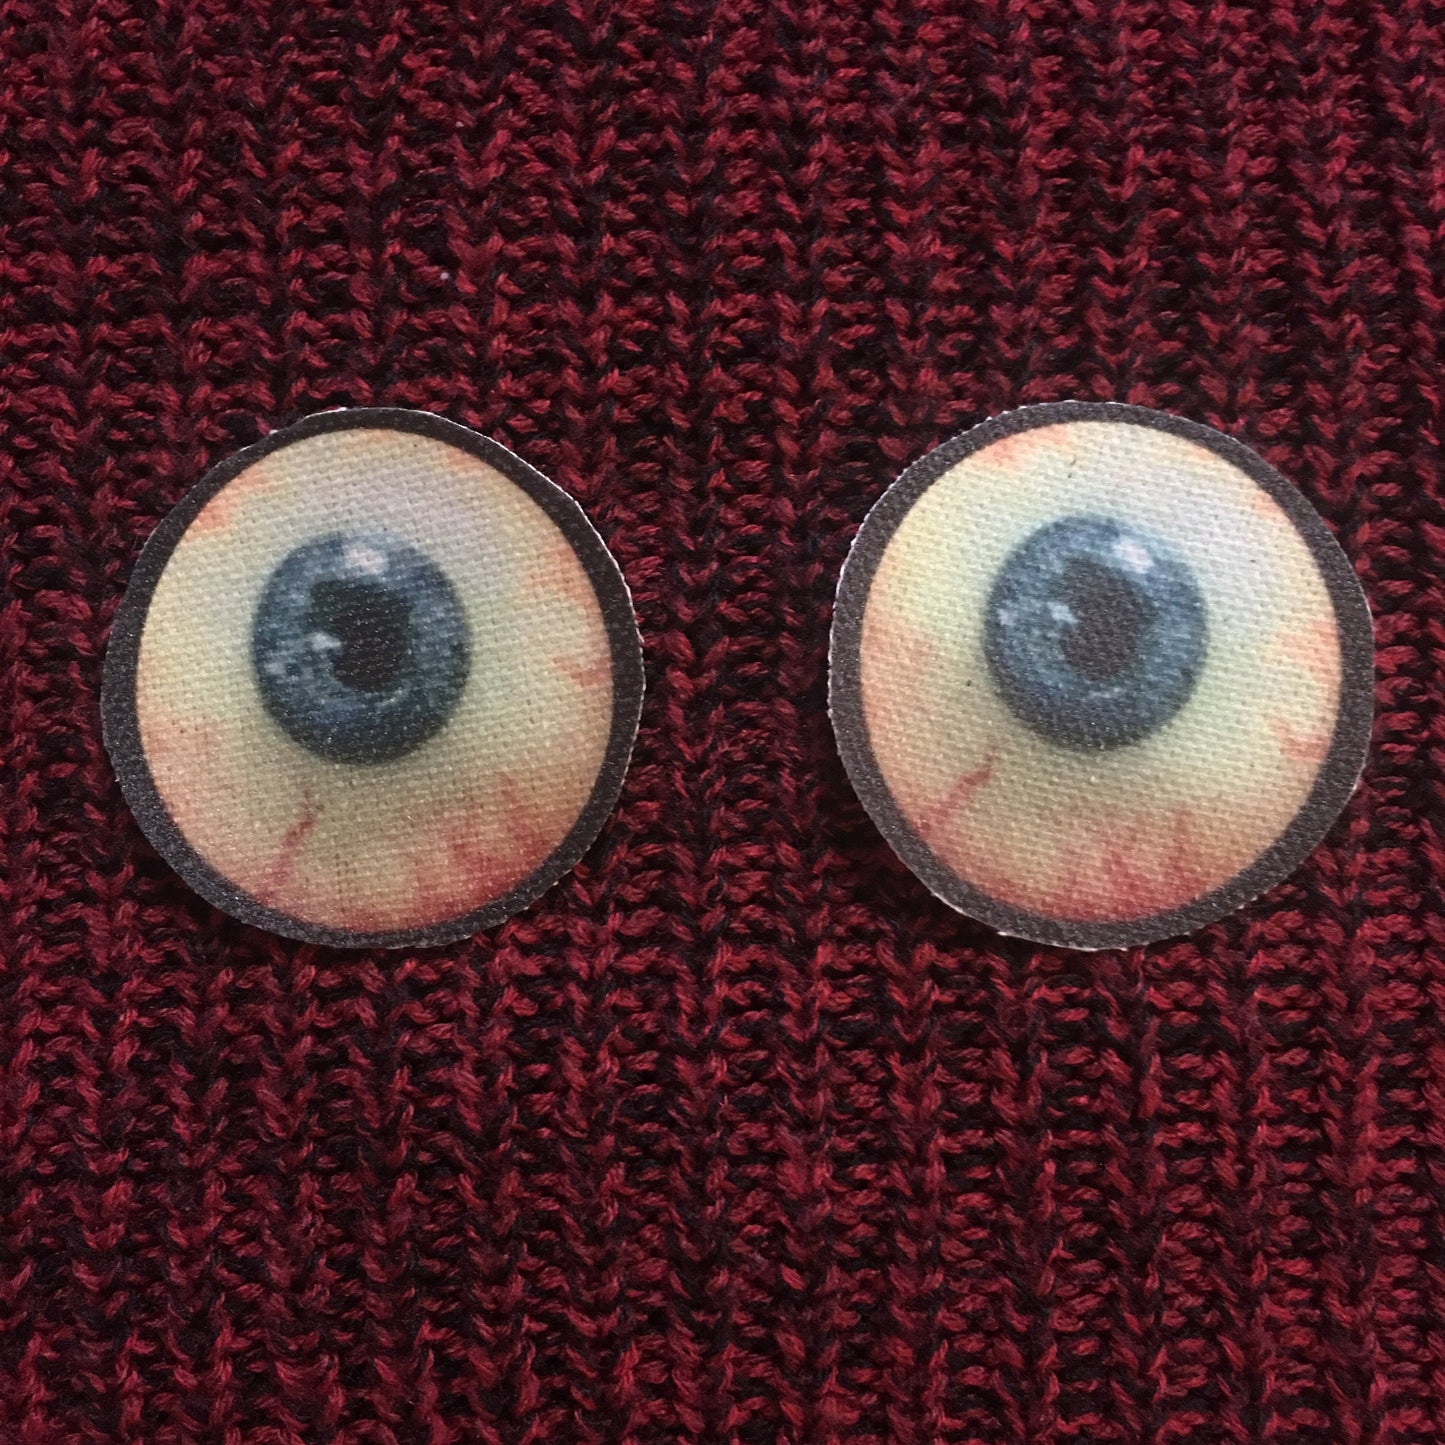 eyeball patch